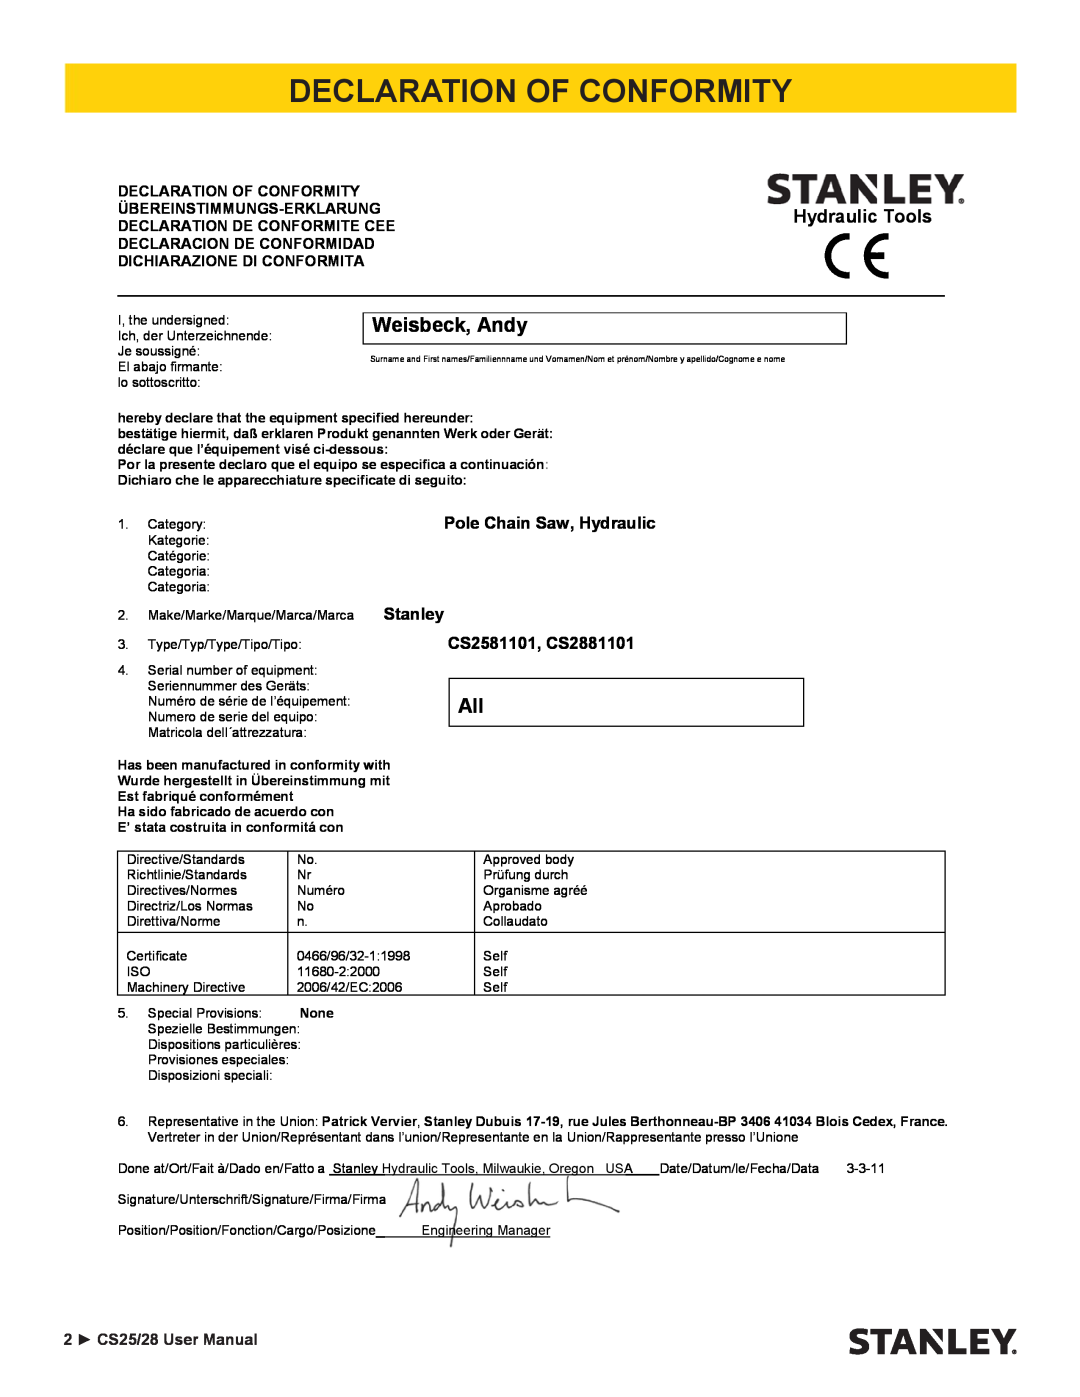 Stanley Black & Decker CS25/28 manual Declaration Of Conformity, Weisbeck, Andy, Pole Chain Saw, Hydraulic, Stanley 